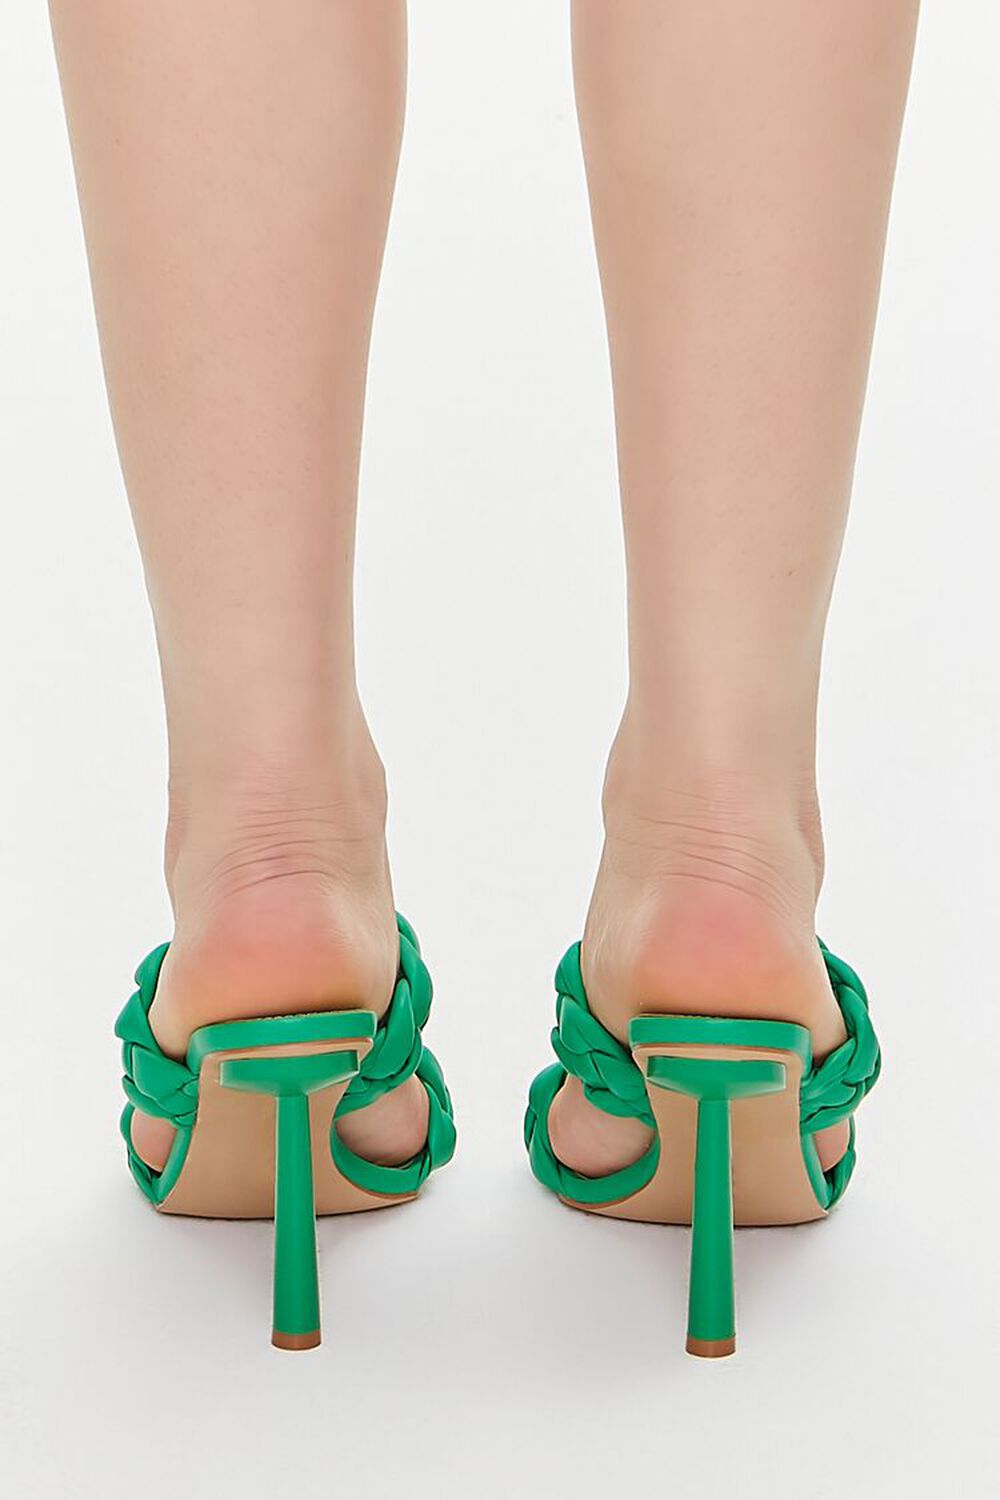 GREEN Braided Open-Toe Stiletto Heels, image 3